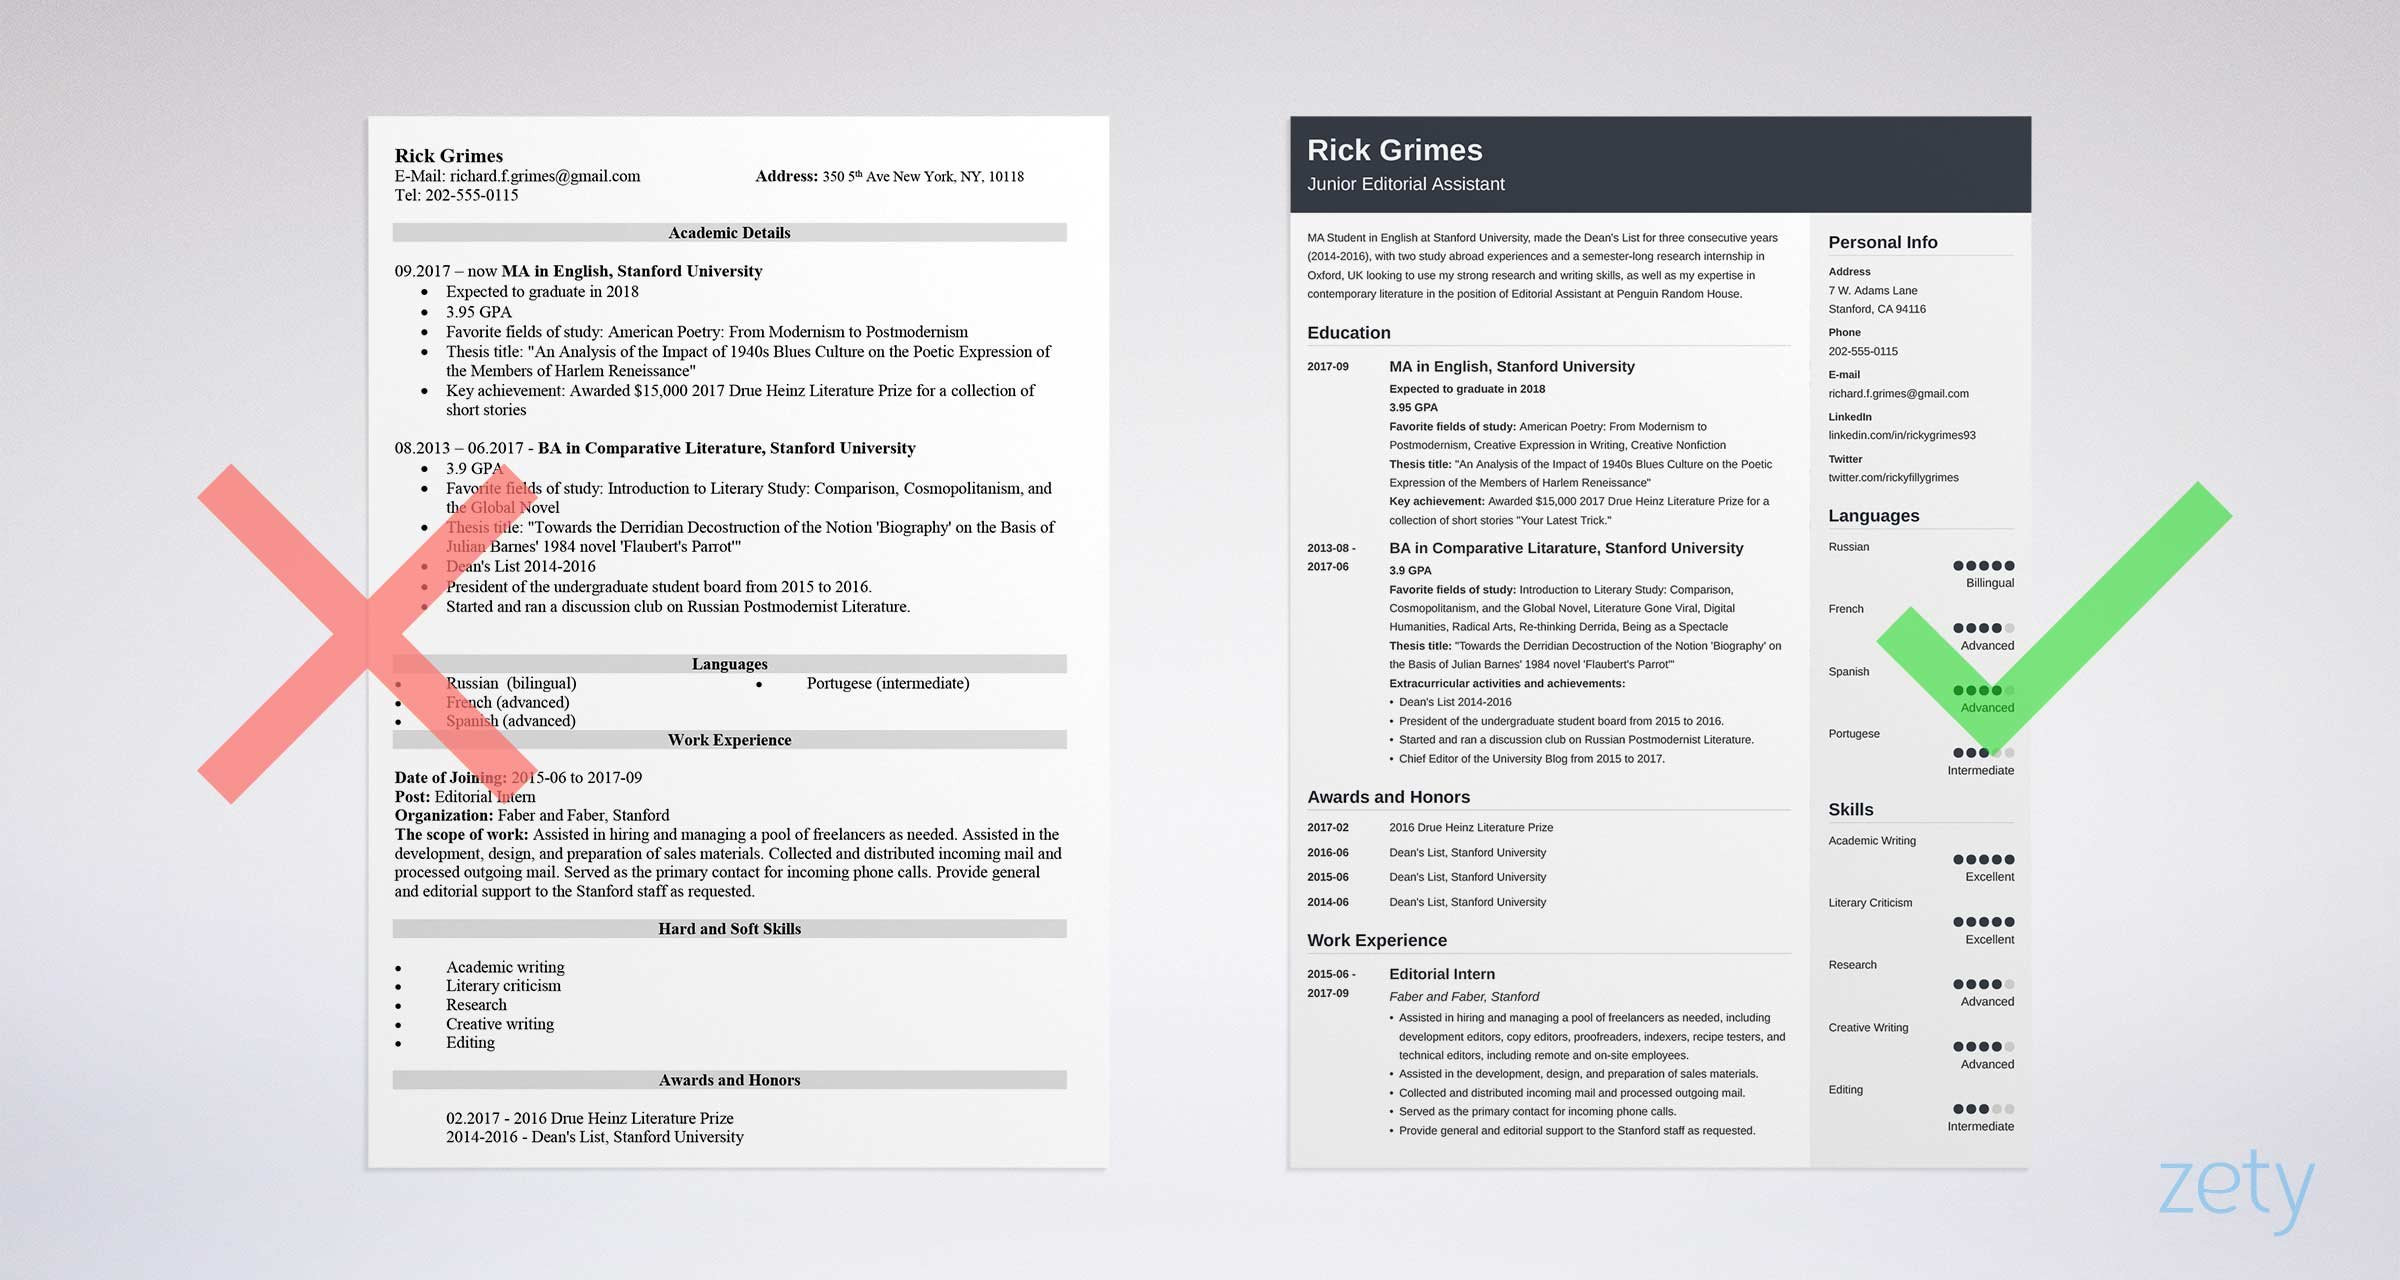 Sample Resume for Models with No Experience 20lancarrezekiq Entry Level Resume Examples, Templates & Tips